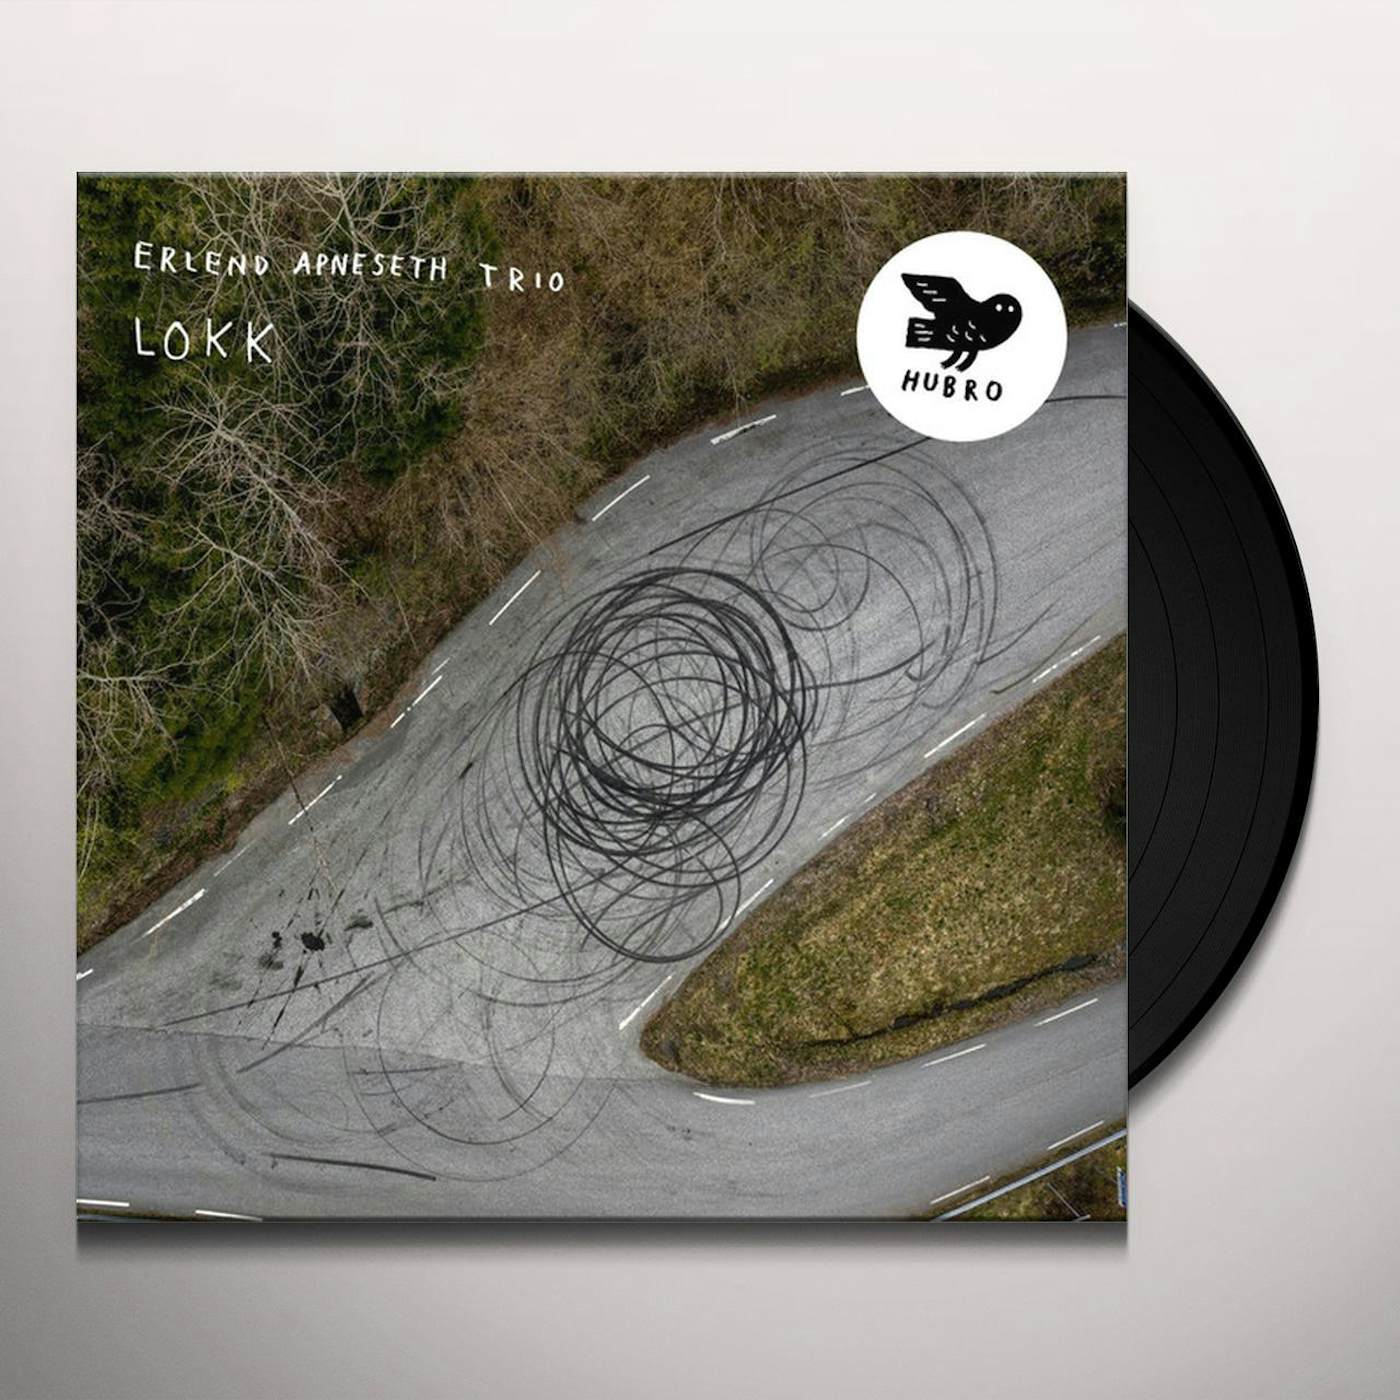 Erlend Apneseth Trio Lokk Vinyl Record